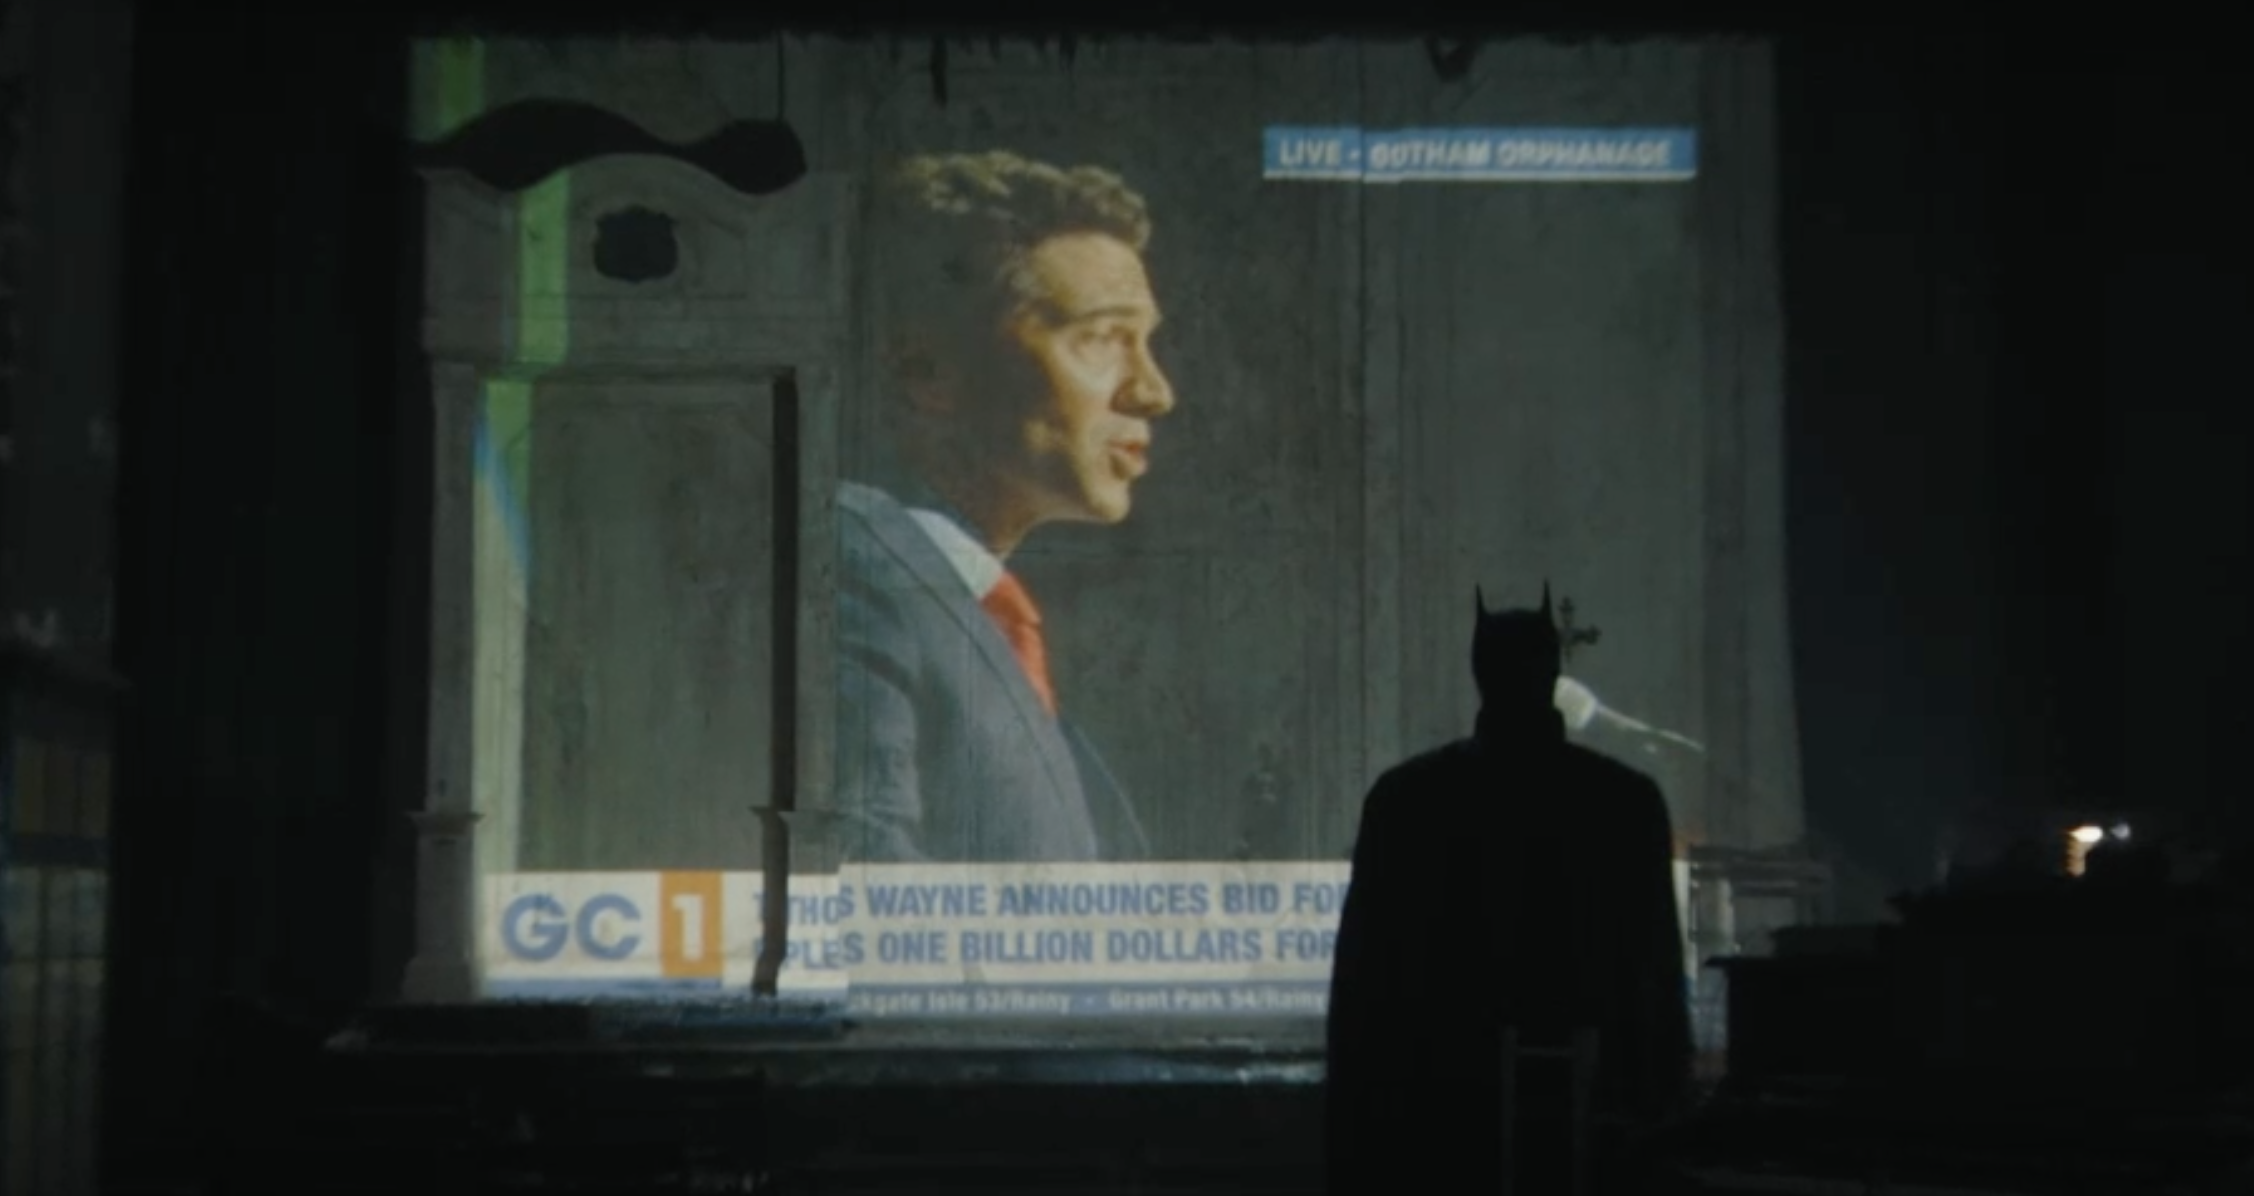 Кадр из фильма «Бэтмен»